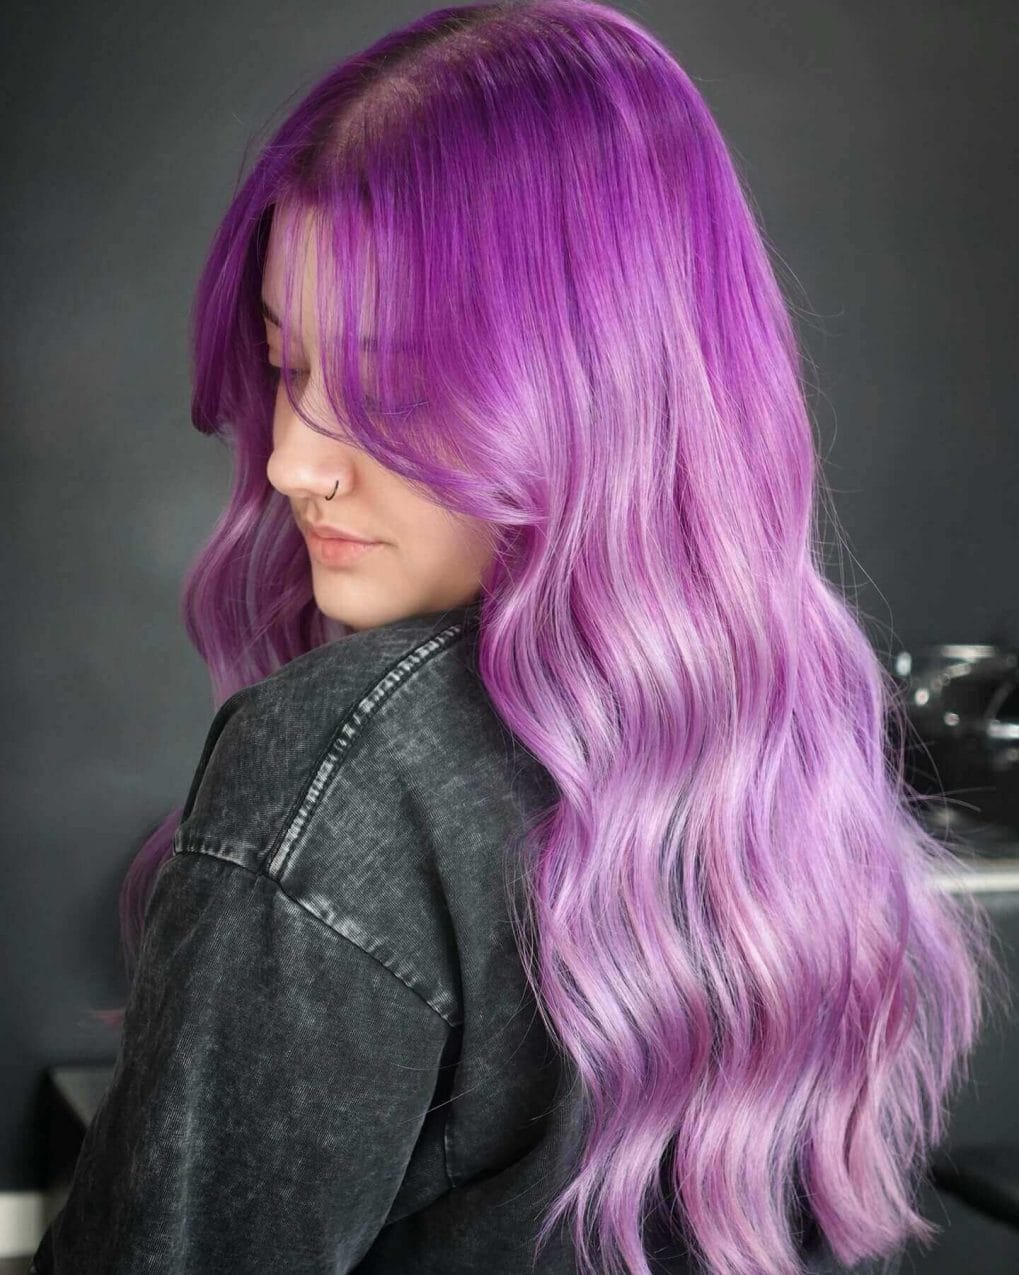 Cool jewel-toned purple long waves with elegant side sweep